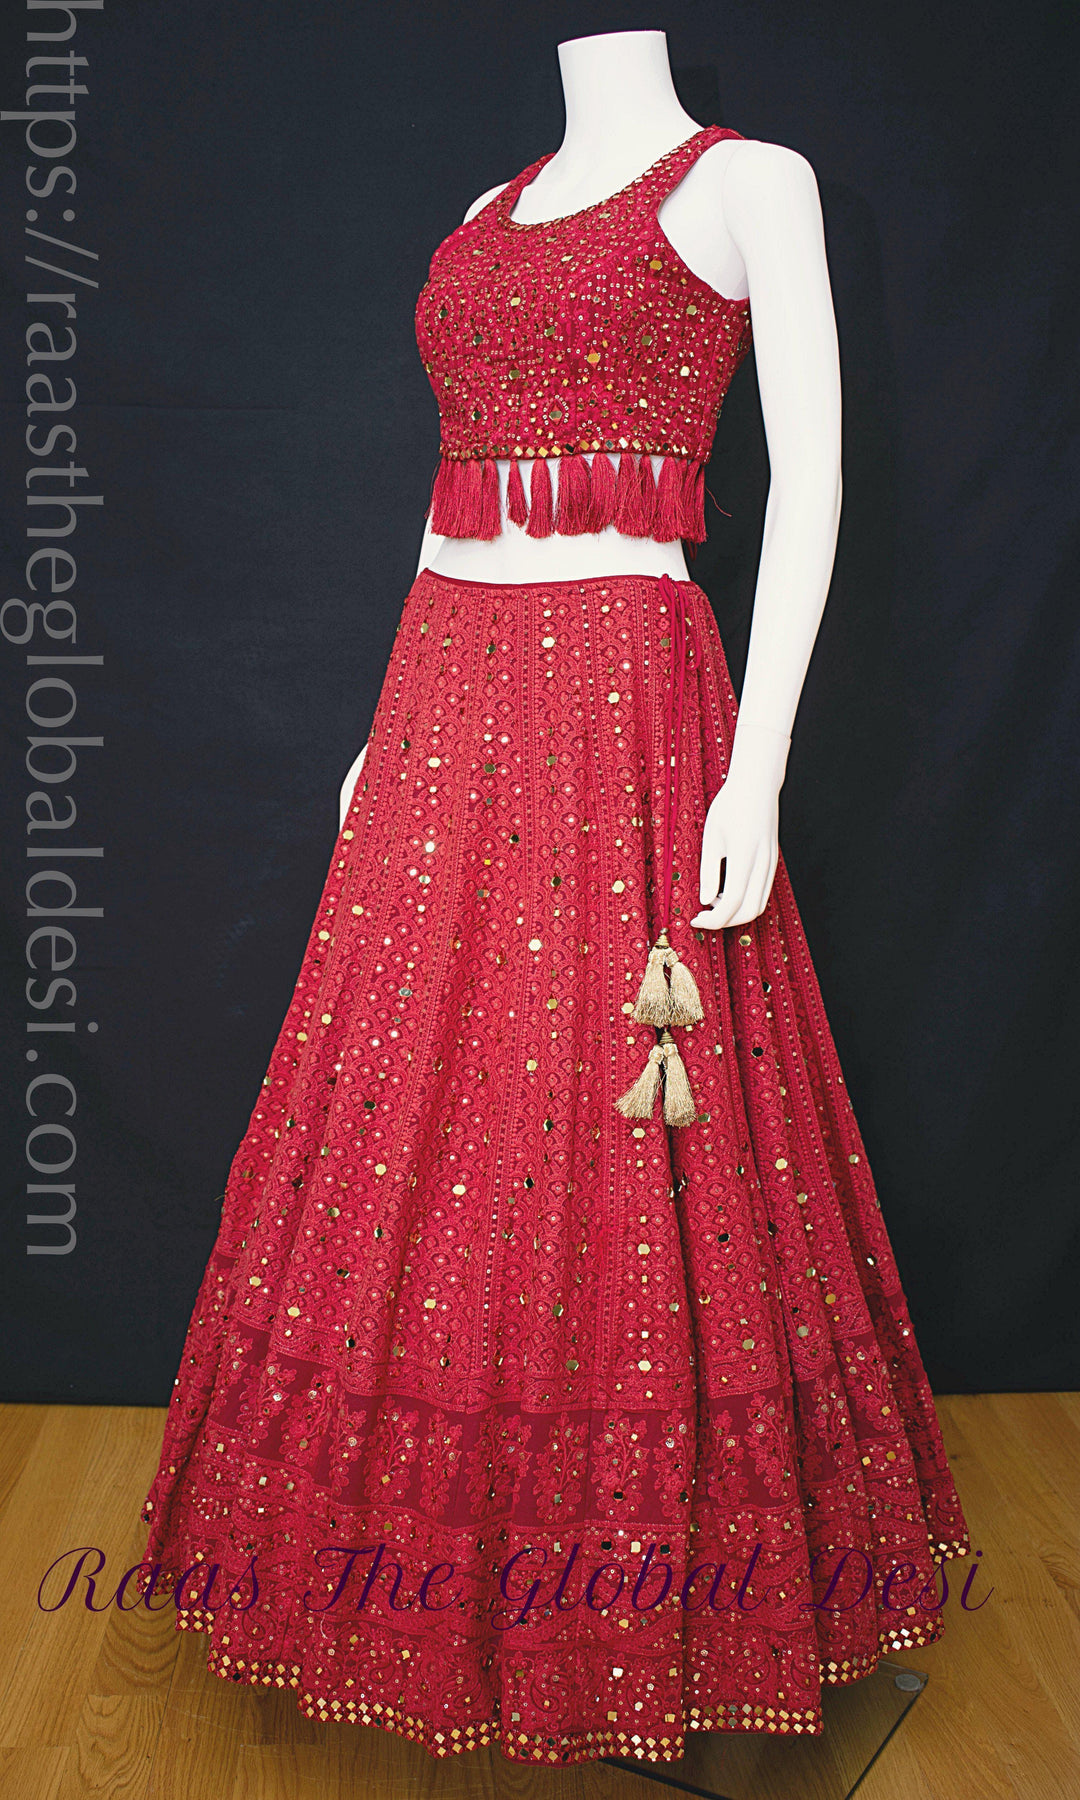 Buy Red satin embroidery bridal lehenga choli at fealdeal.com